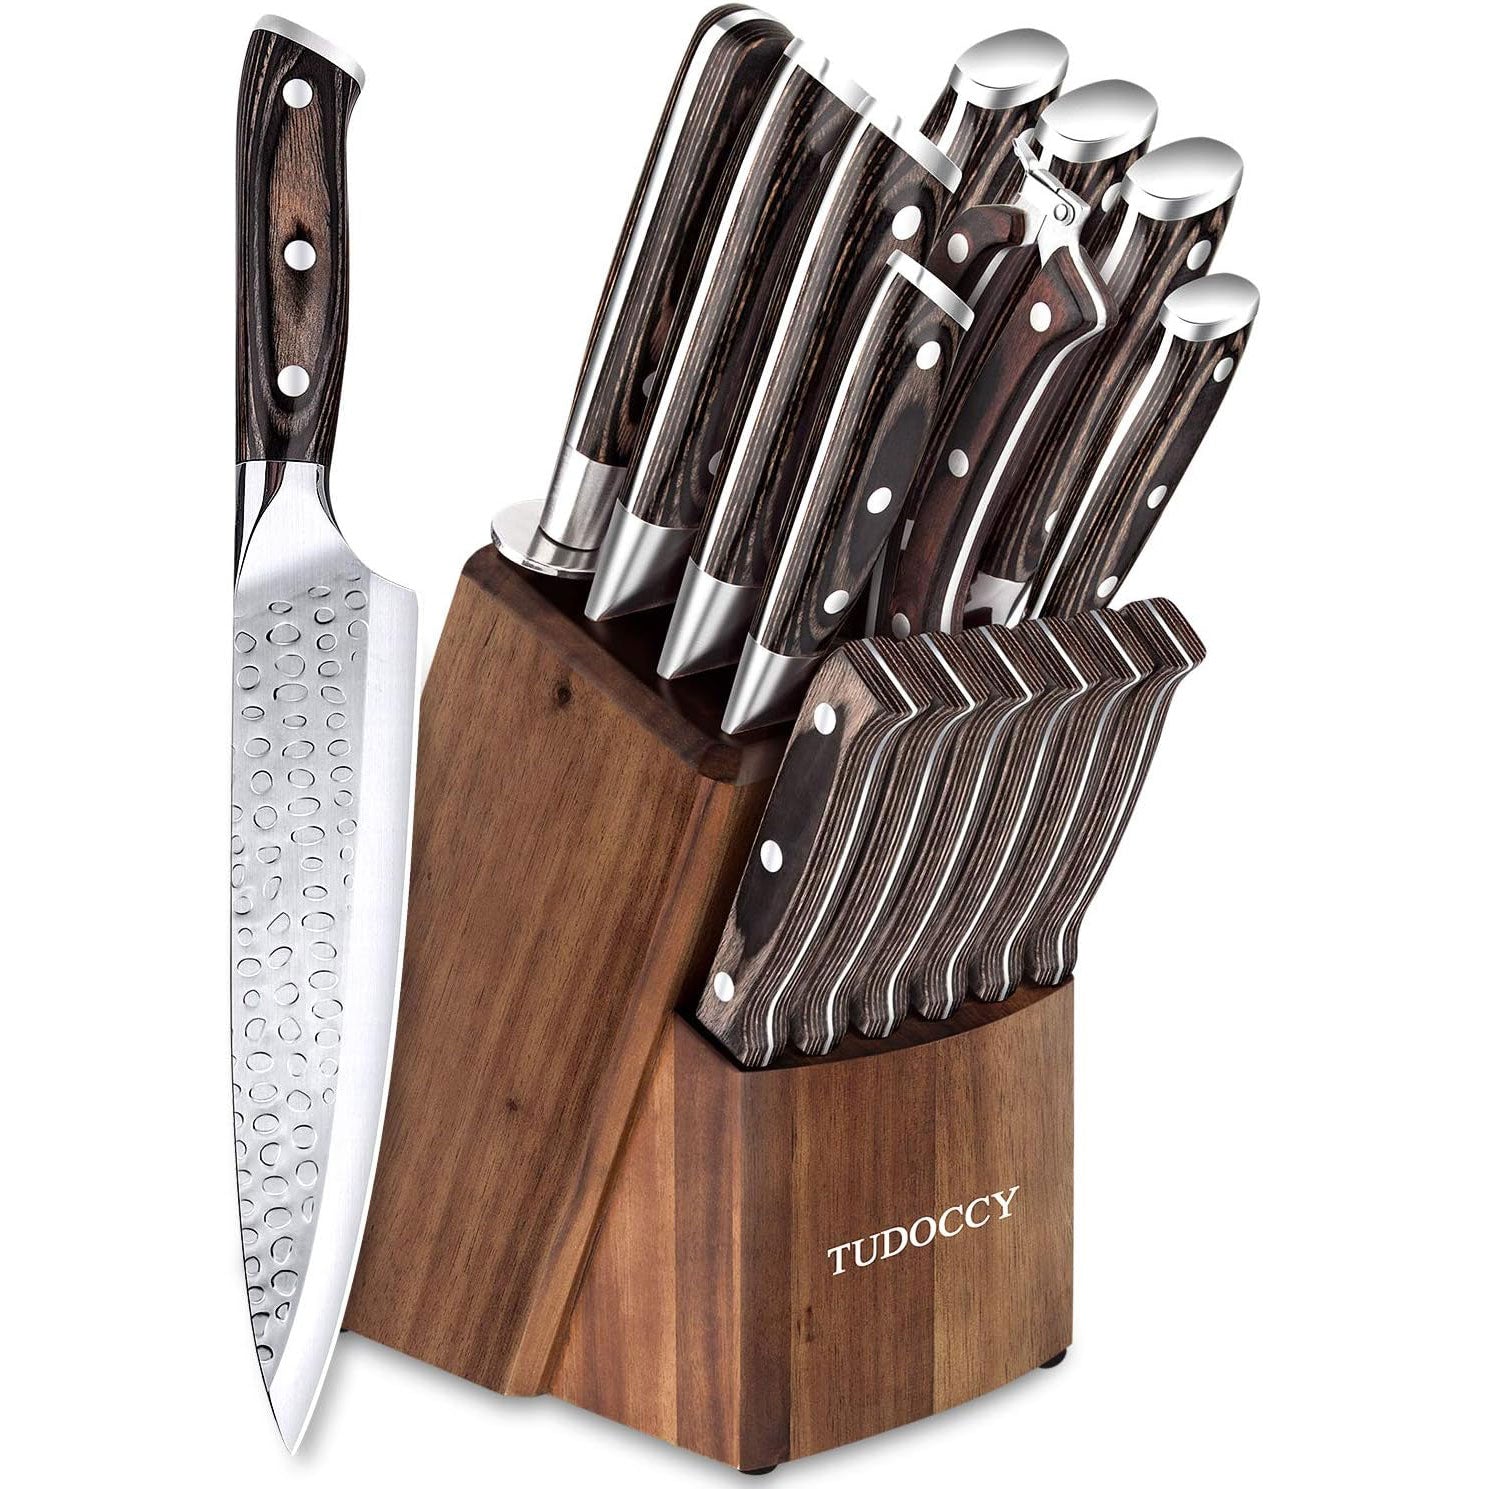 KD 16 pcs Kitchen Knife Set With Wooden Block